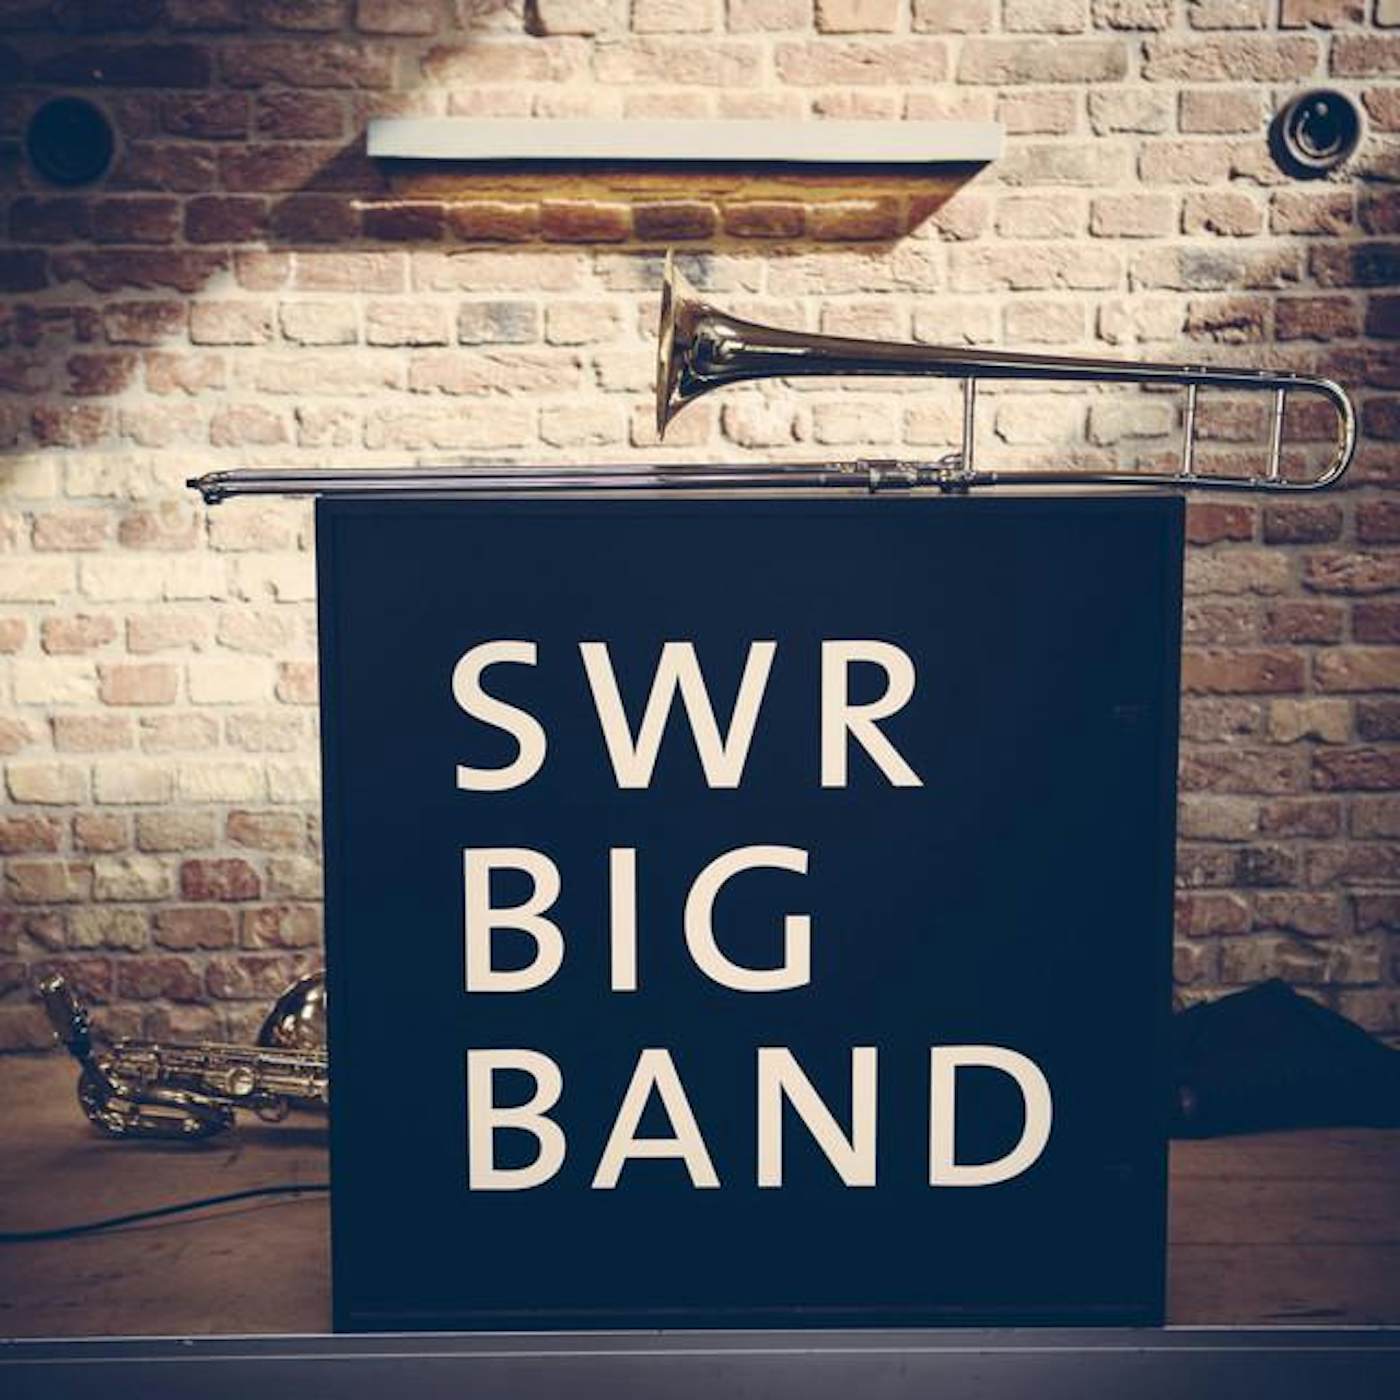 The SWR Big Band